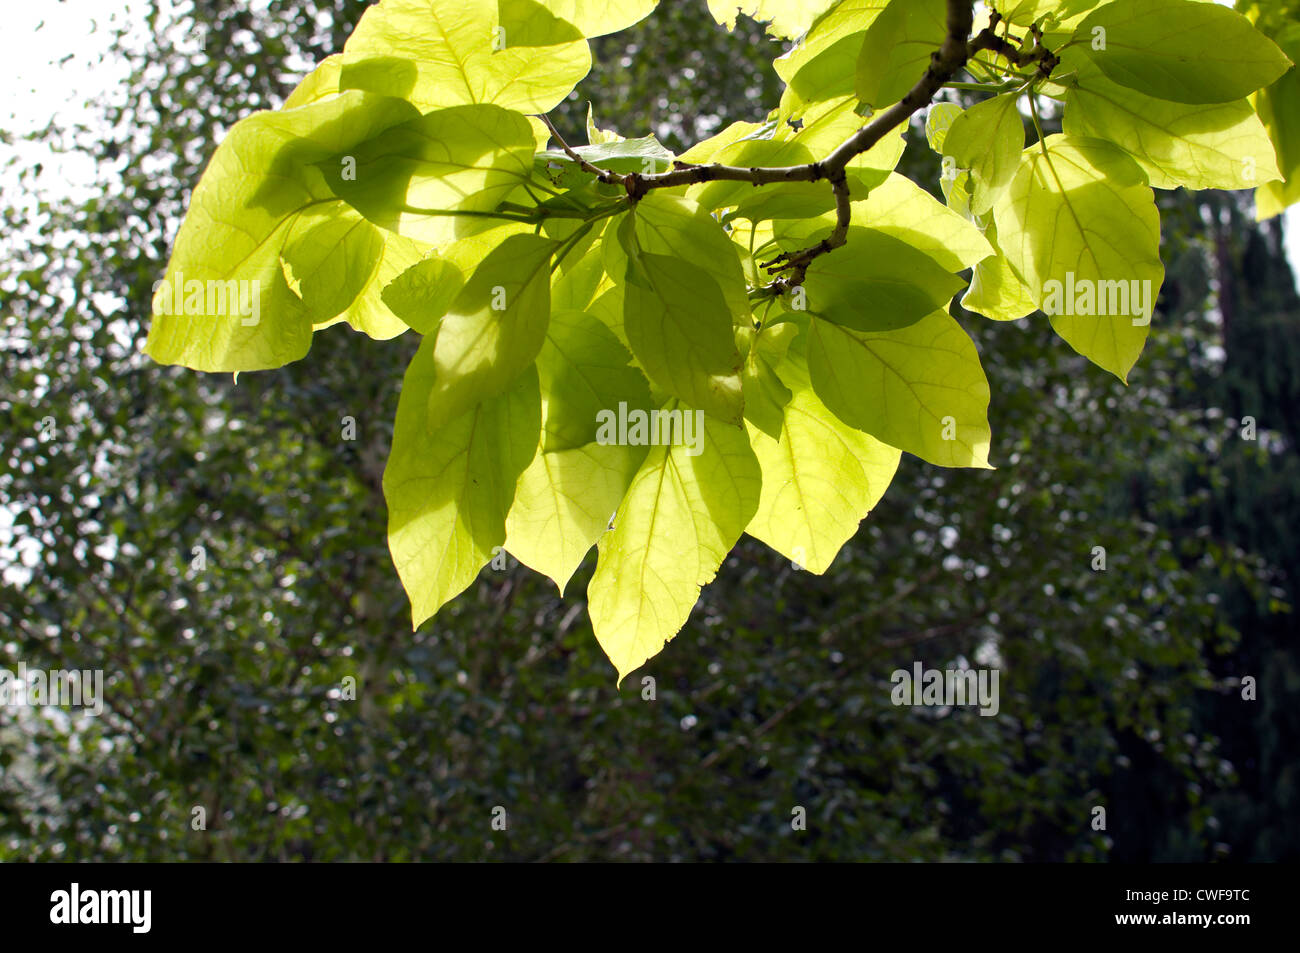 Catalpa tree in Jephson Gardens, Leamington Spa, UK Stock Photo